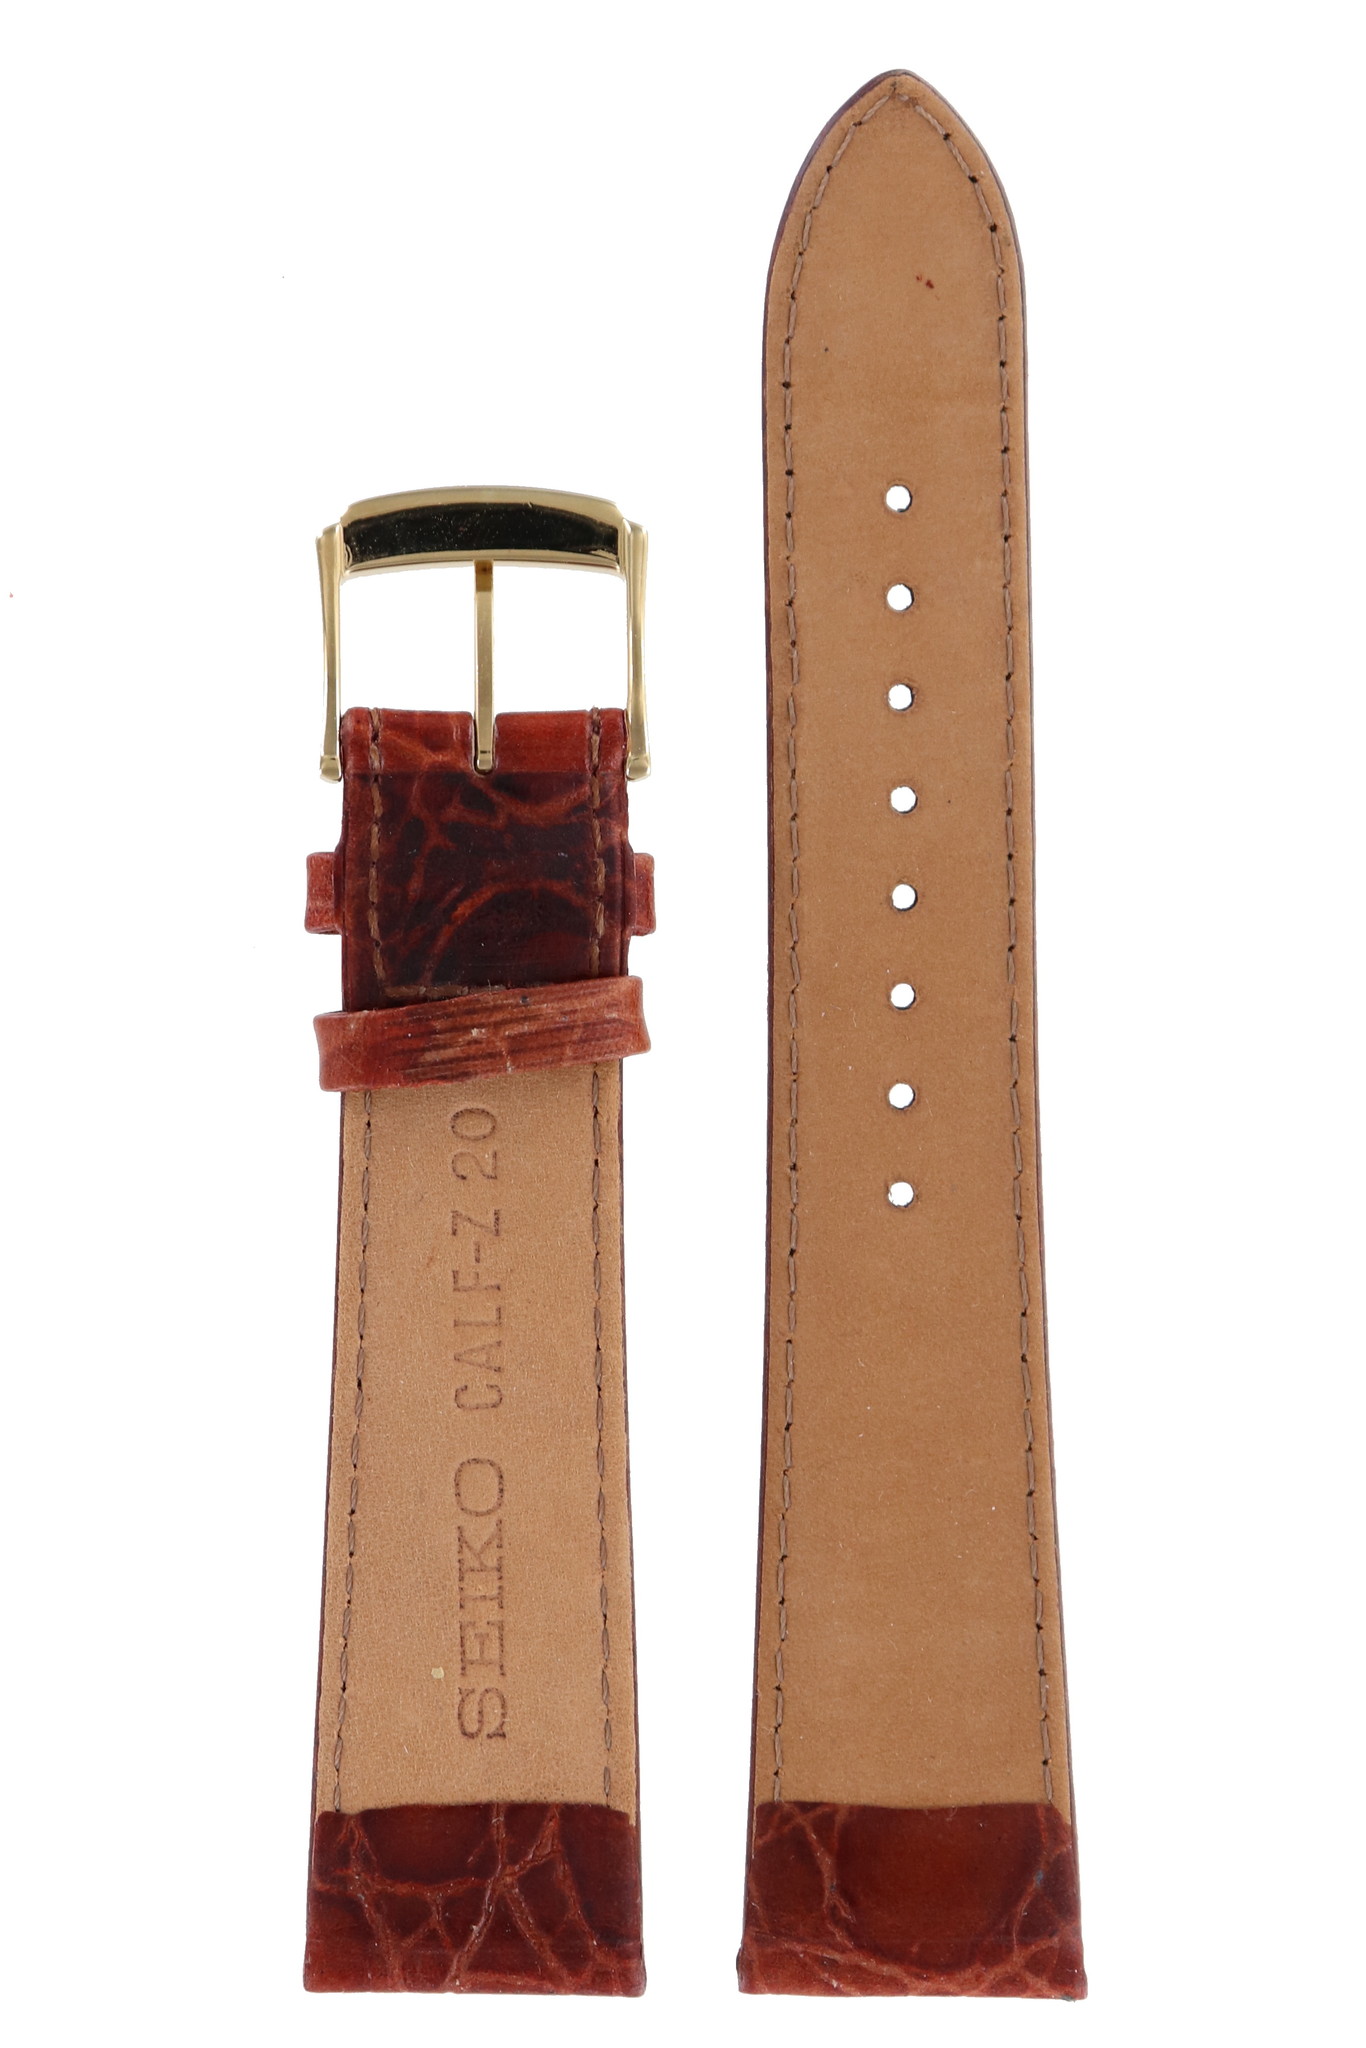 Seiko Calf-Z 20 - 7T32-7B70 Watch Band Brown Leather 20 mm - WatchPlaza